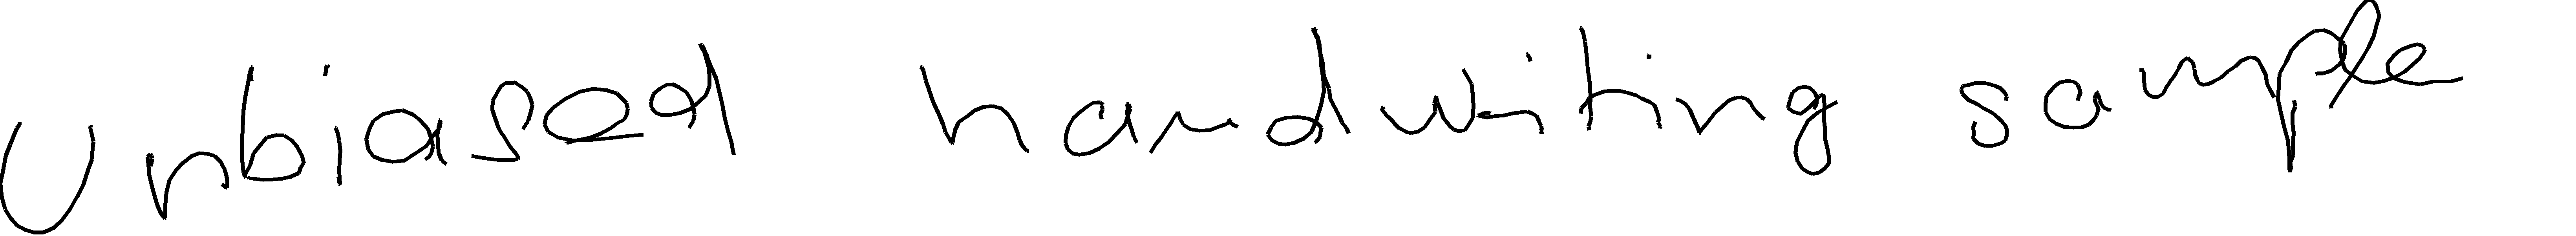 Unbiased_handwriting_sample__9.png